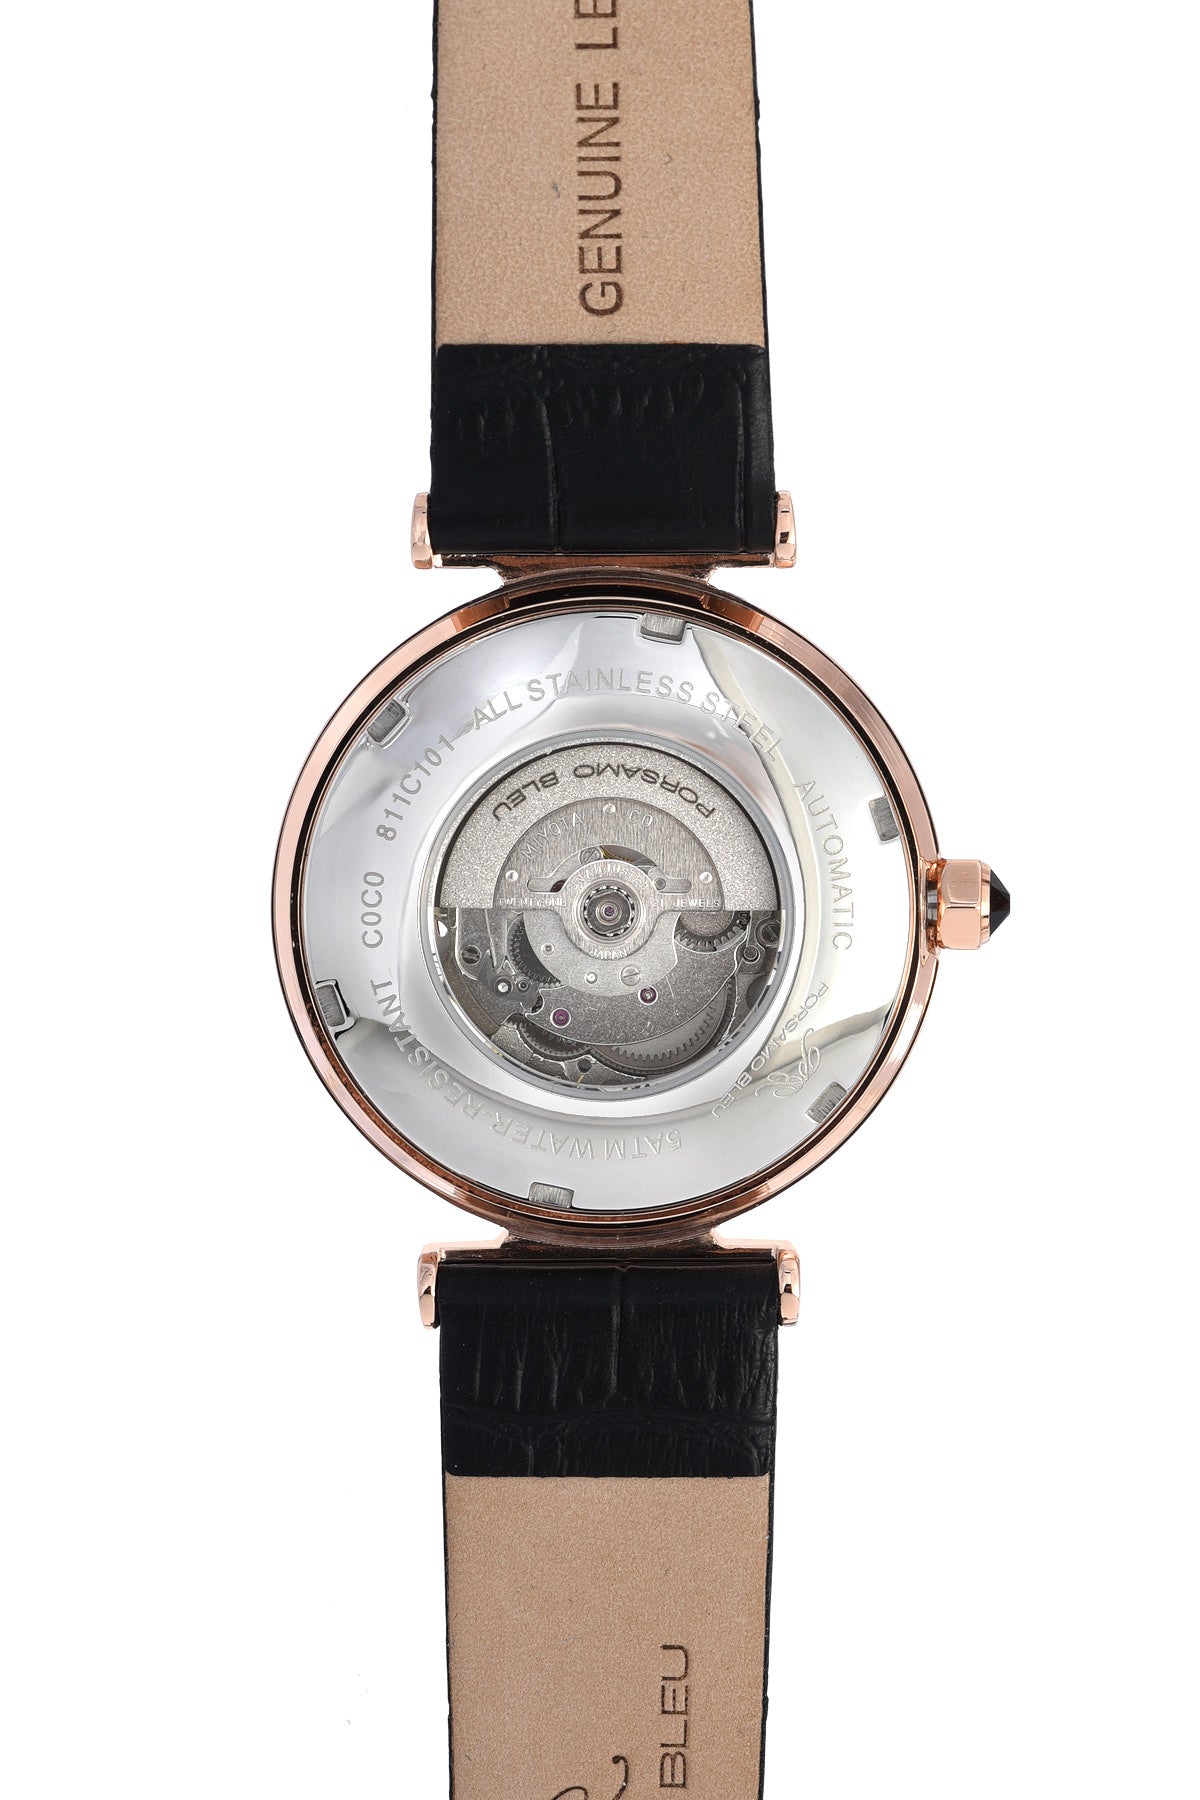 Porsamo Bleu Coco luxury automatic women's watch, genuine leather band, rose, black 811CCOL